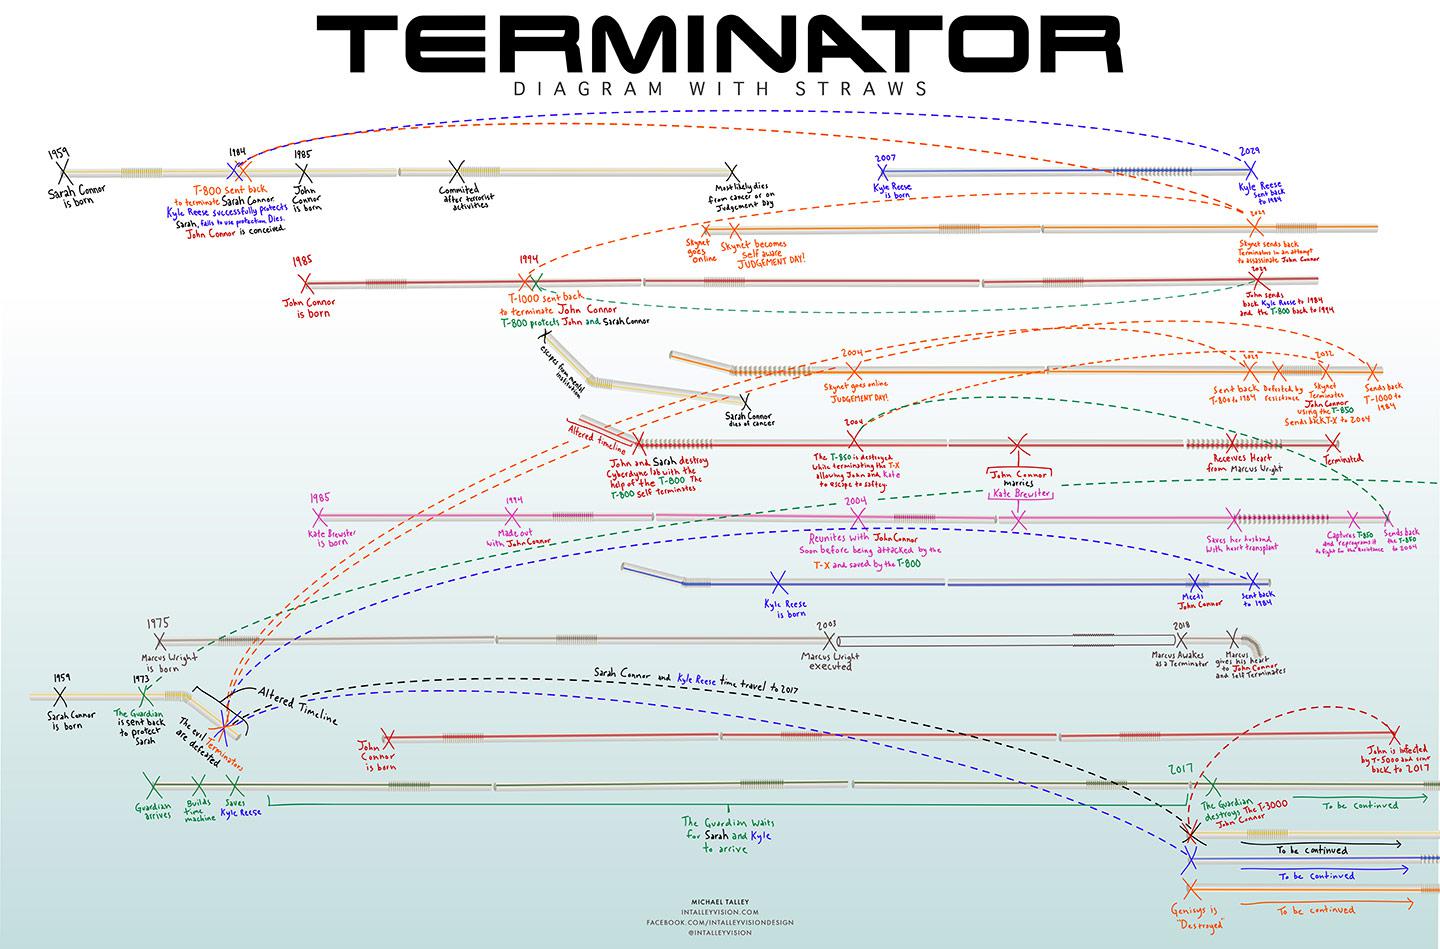 Terminator diagram with straws